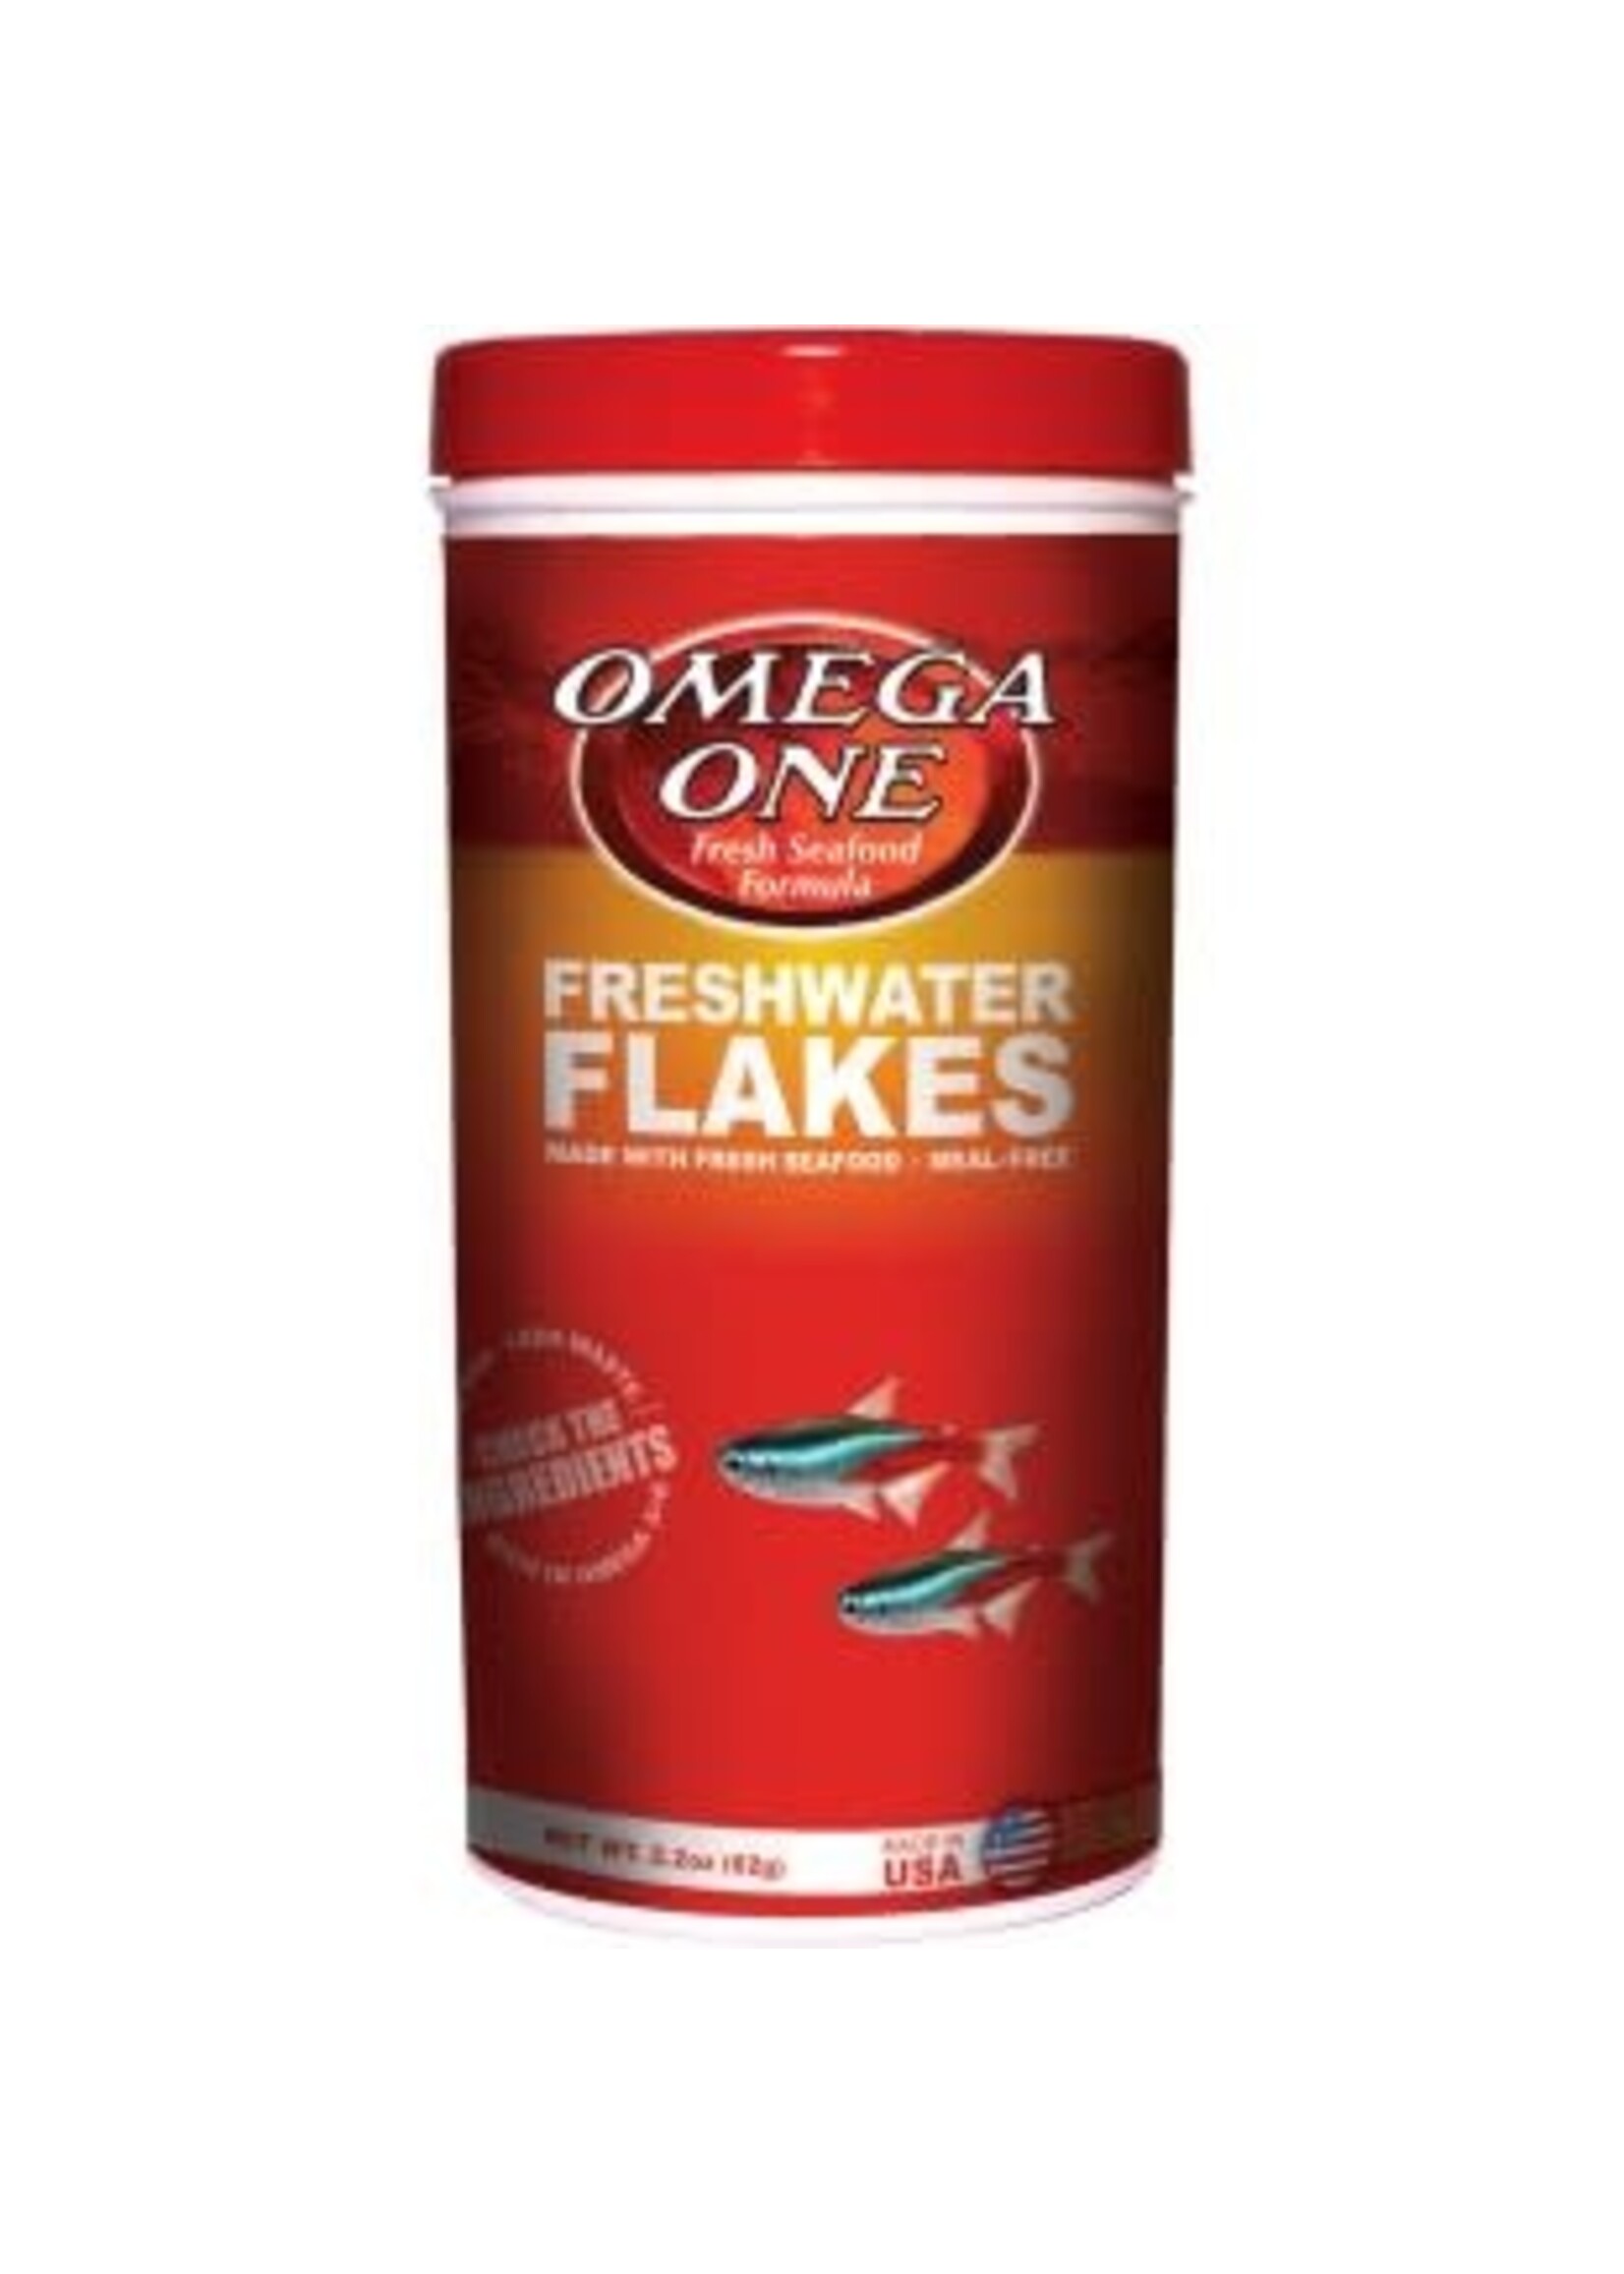 Omega One Omega One Freshwater Flakes